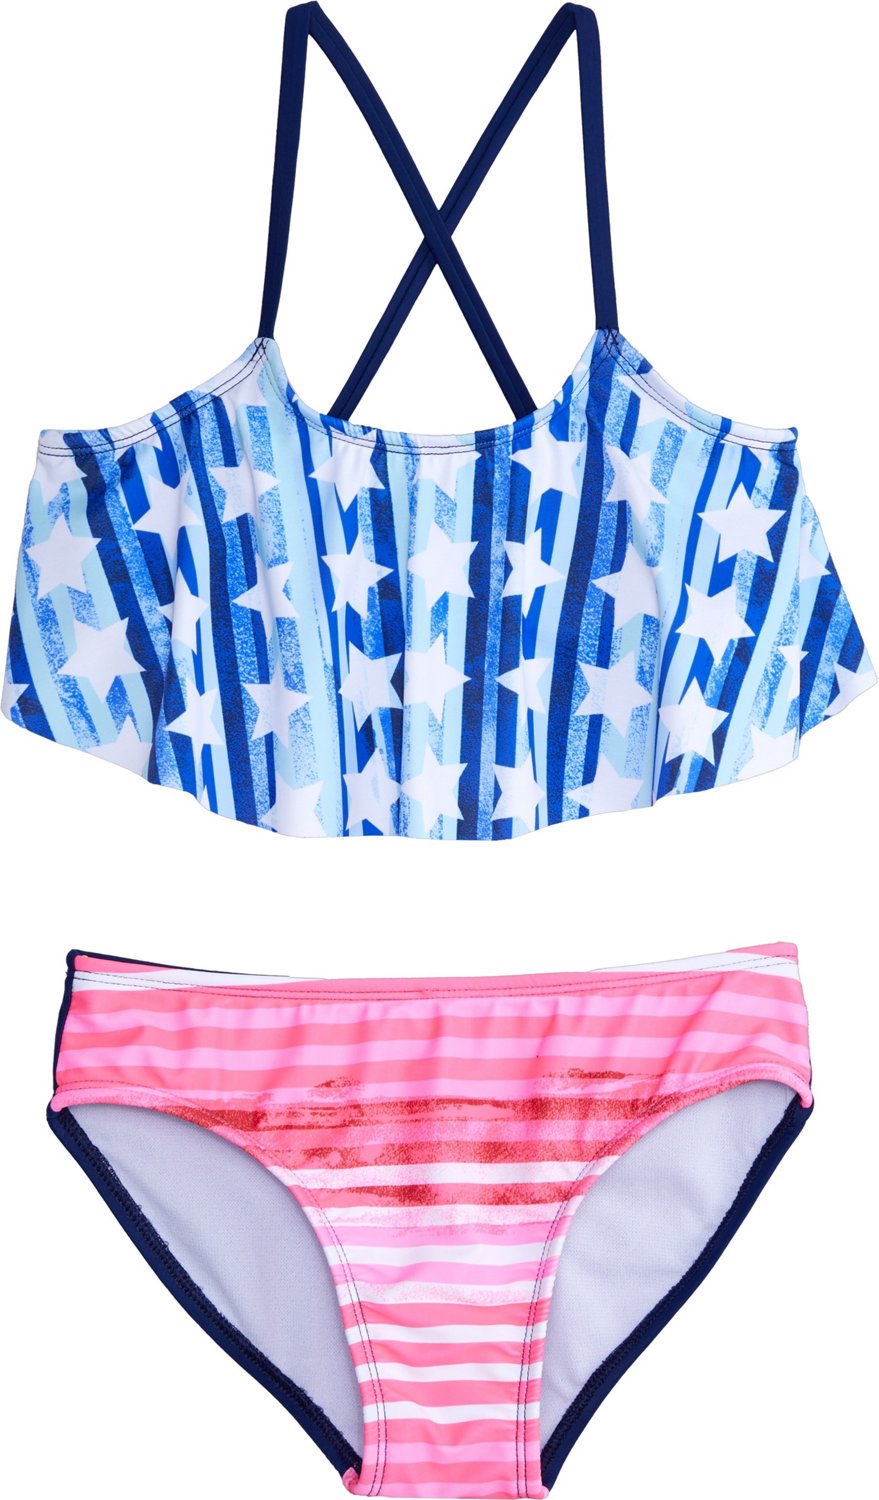 Bench Online, Better Made Envi Women's Two Piece Swimsuit Set